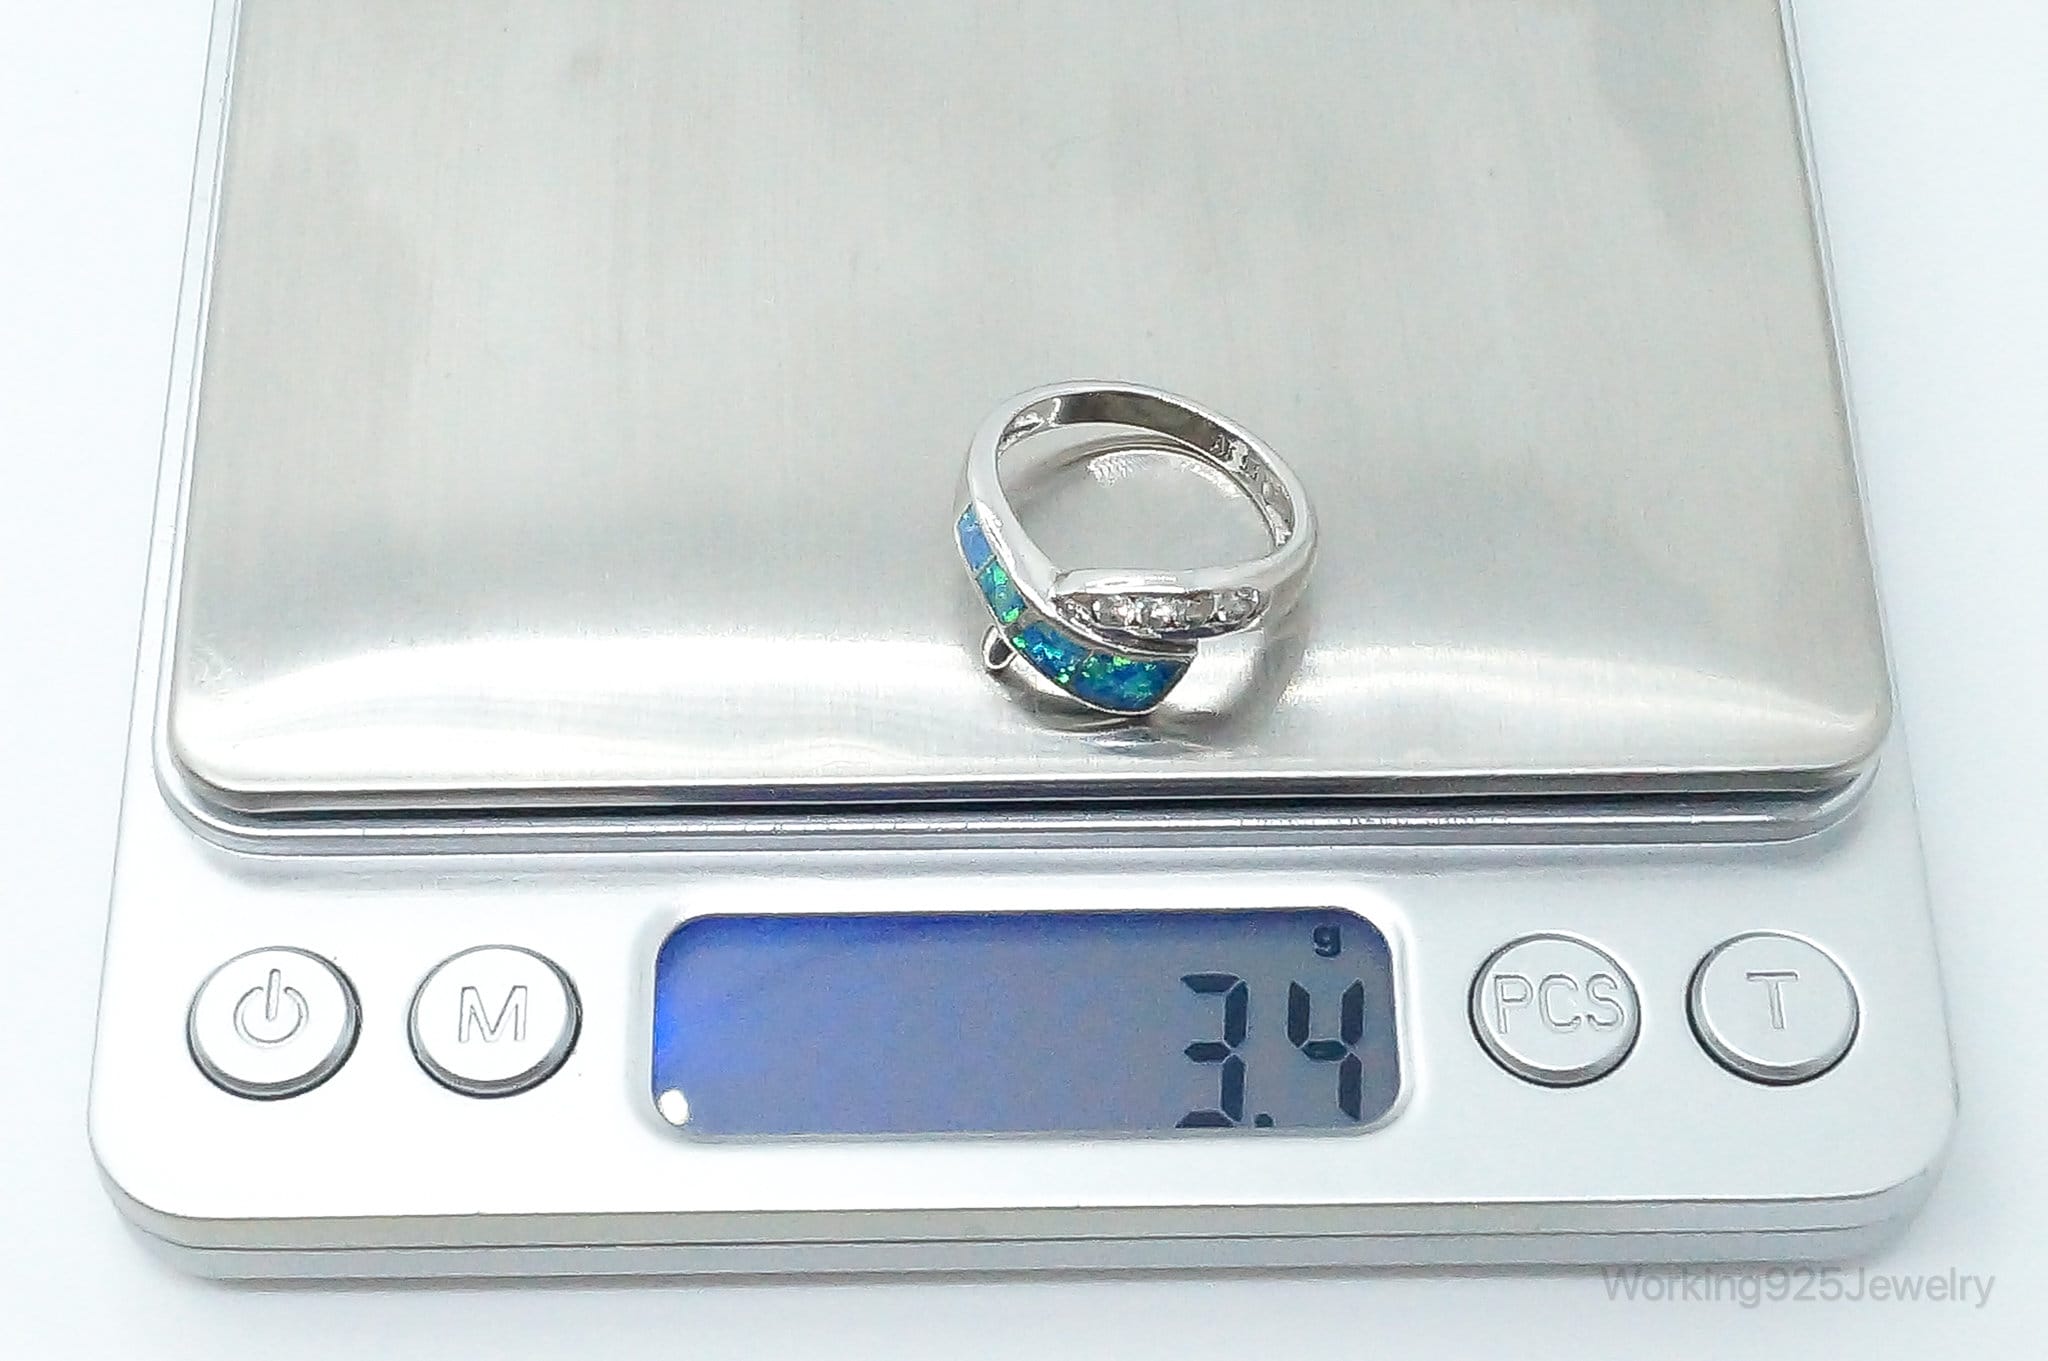 Designer AK Cubic Zirconia Opal Sterling Silver Ring - Size 7